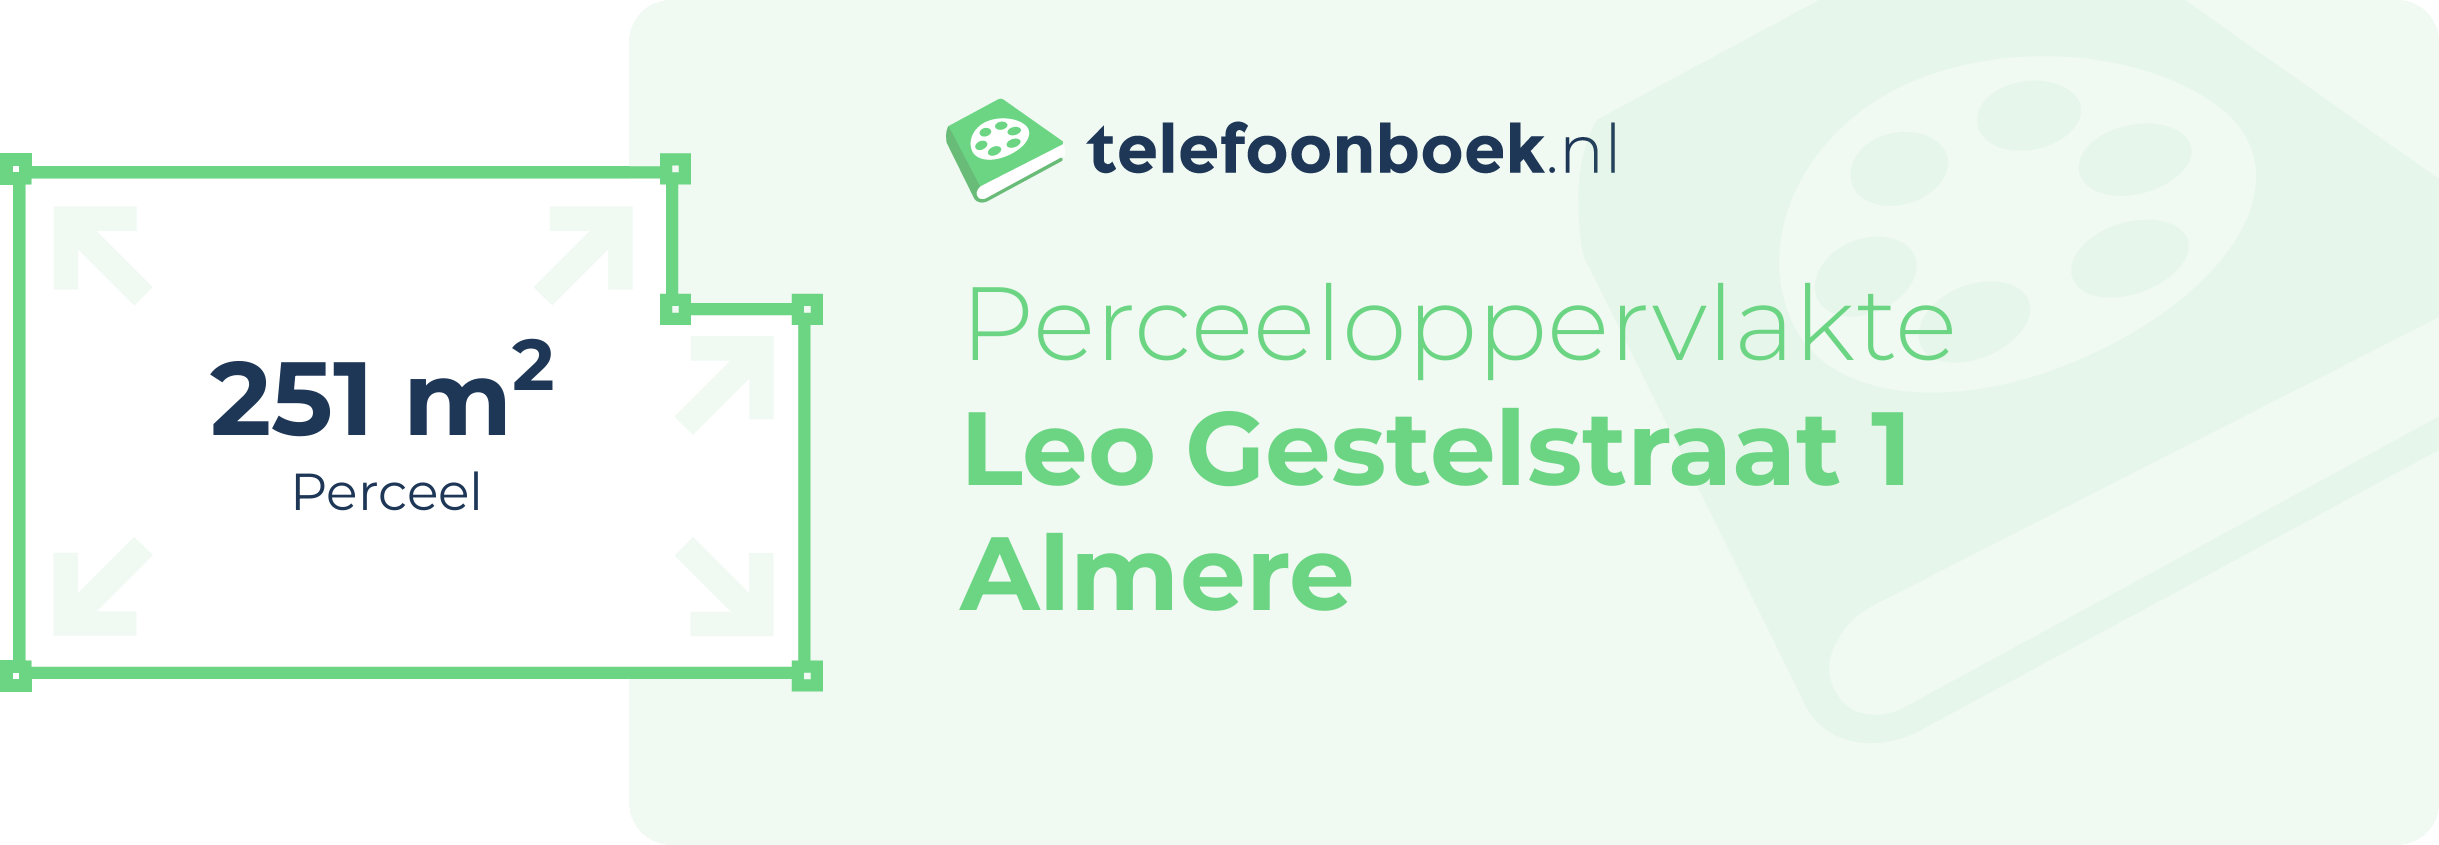 Perceeloppervlakte Leo Gestelstraat 1 Almere